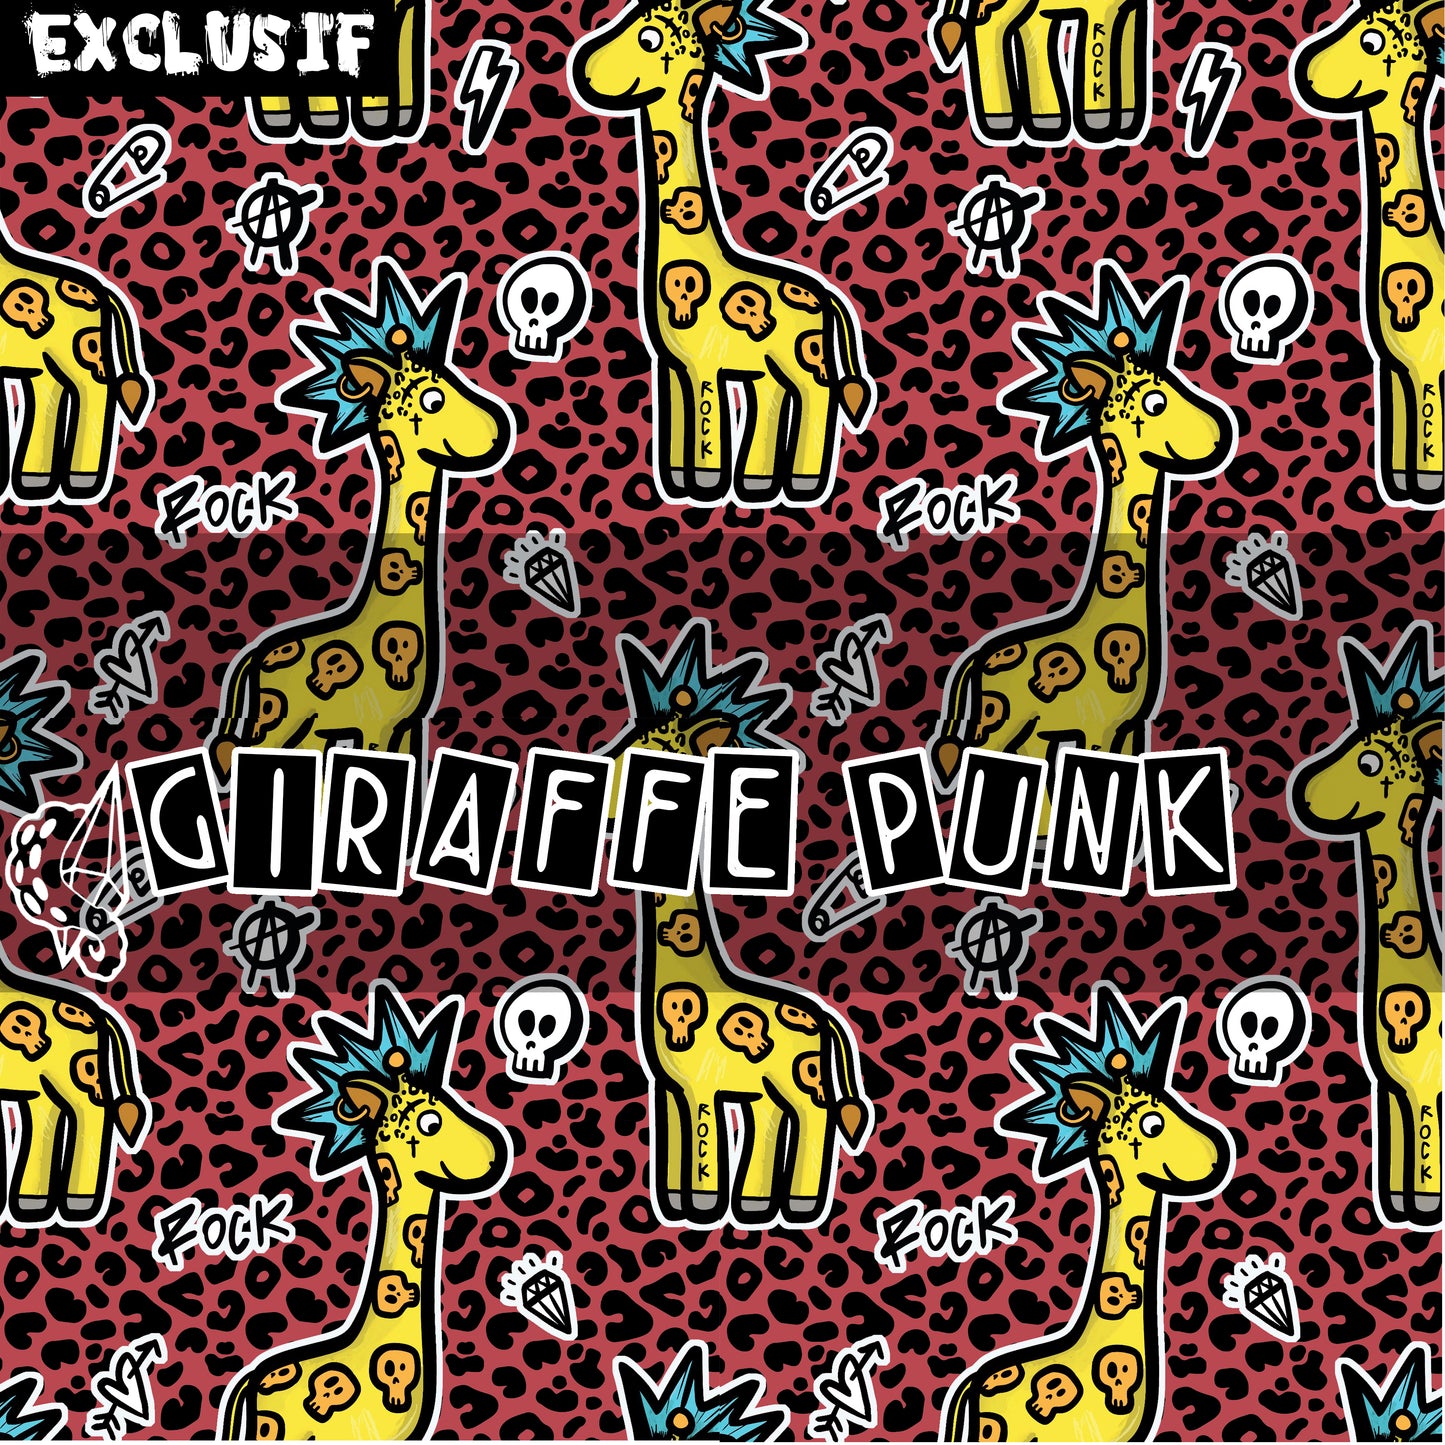 Giraffe Punk